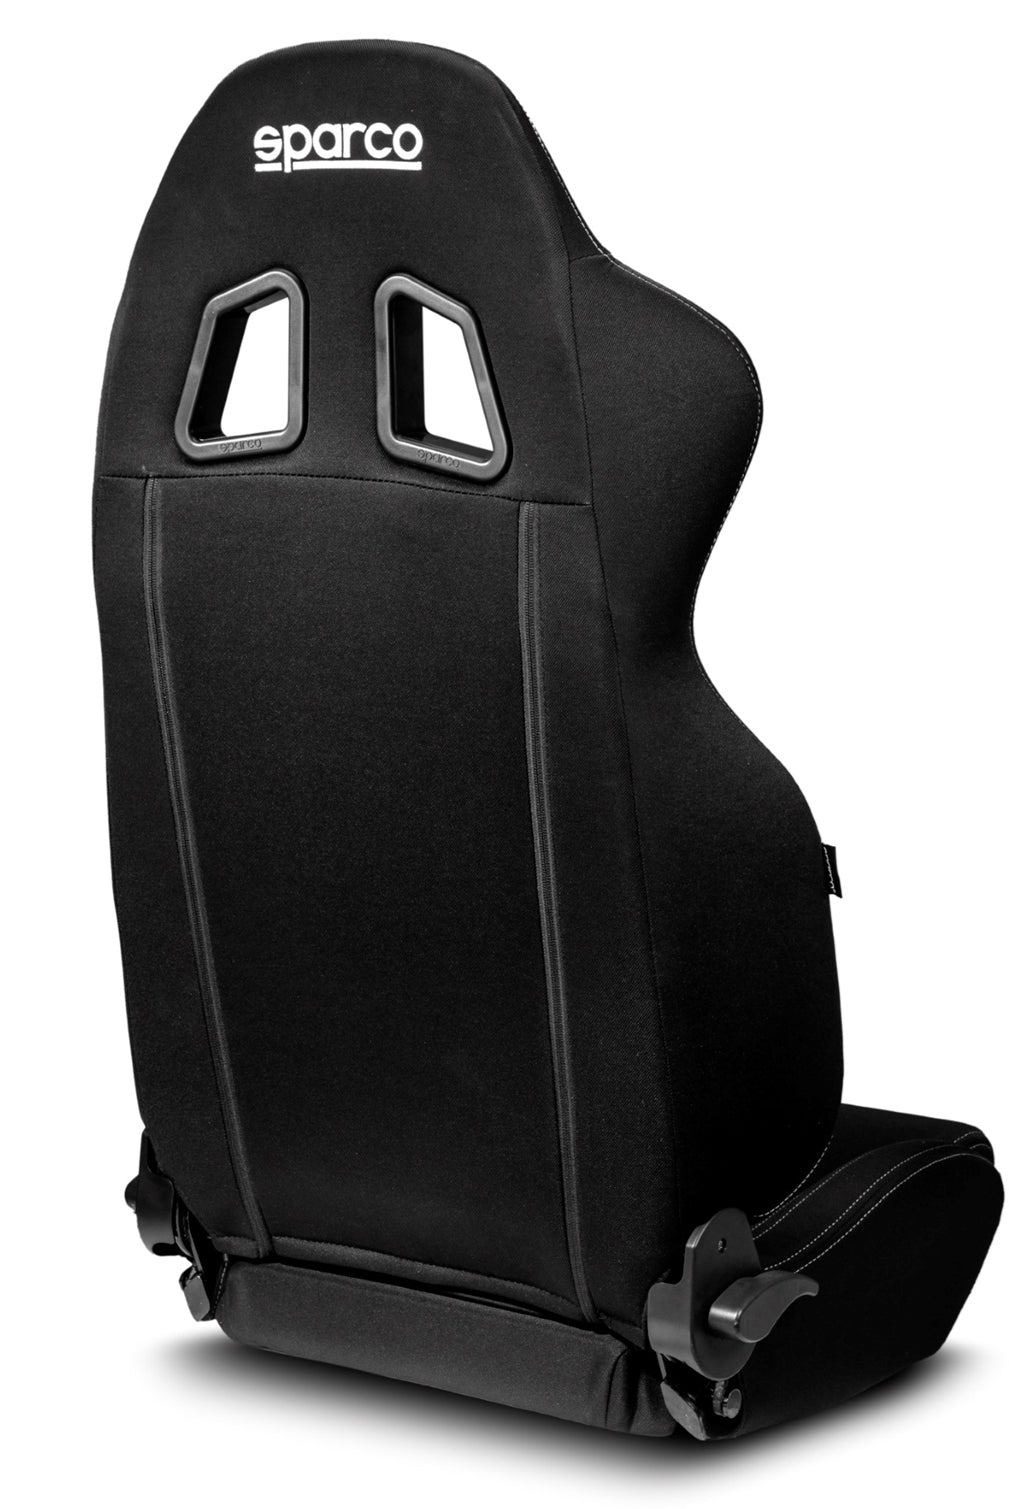 Sparco R100 Seat Black Rear Image